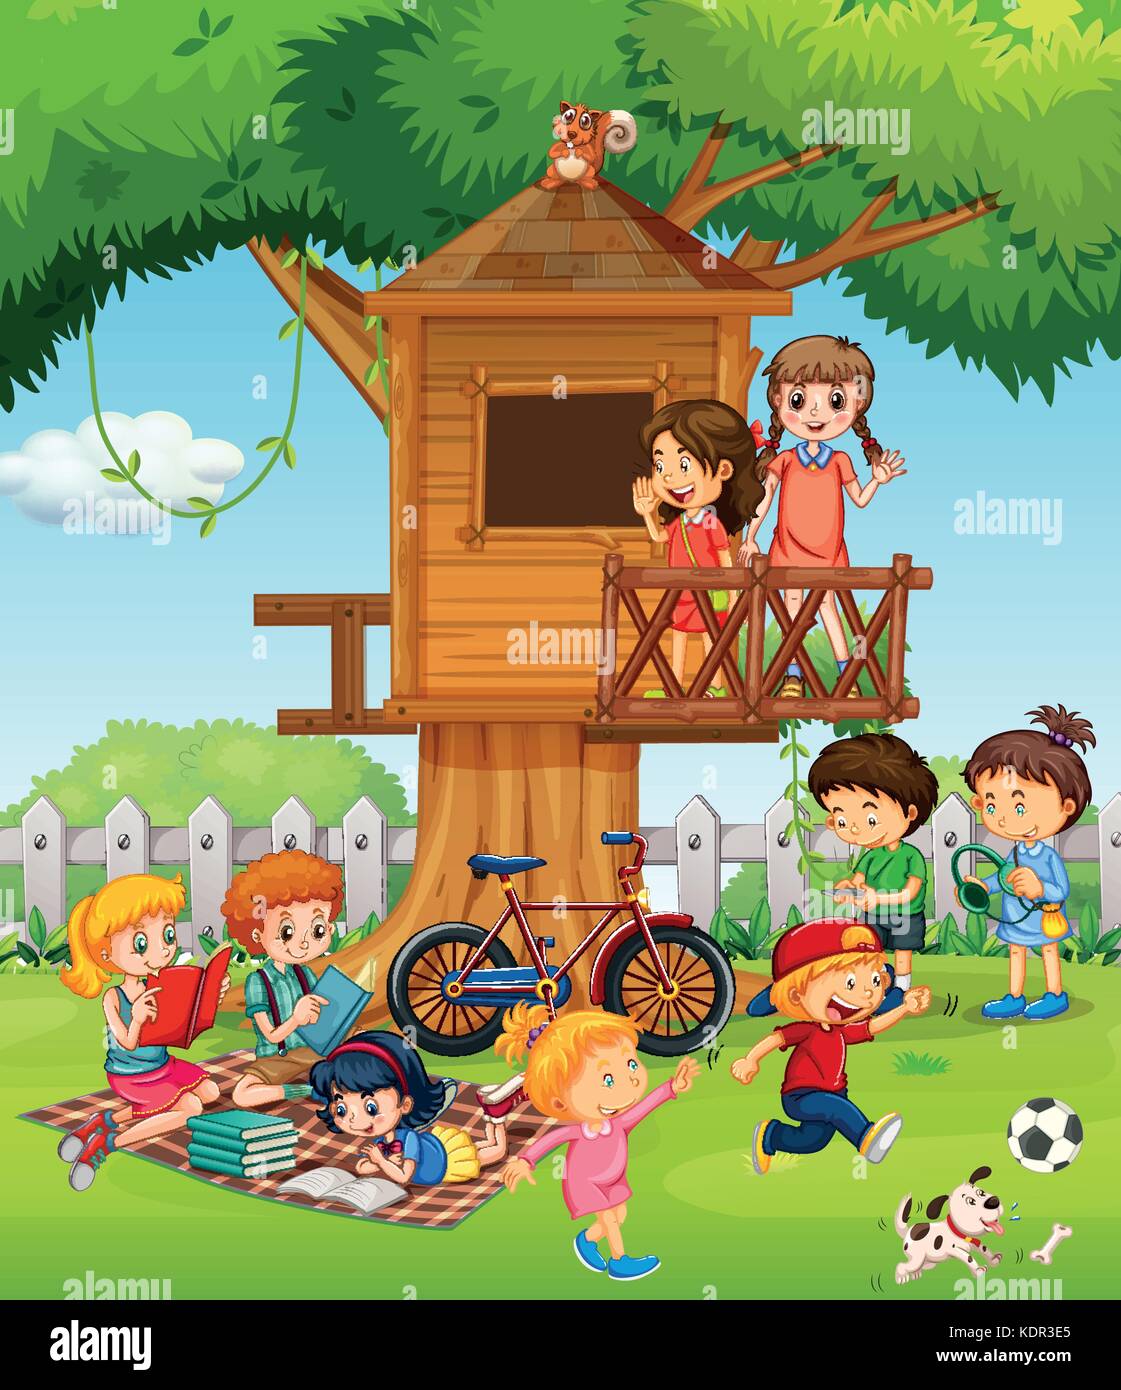 Children playing in the garden illustration Stock Vector Image & Art - Alamy